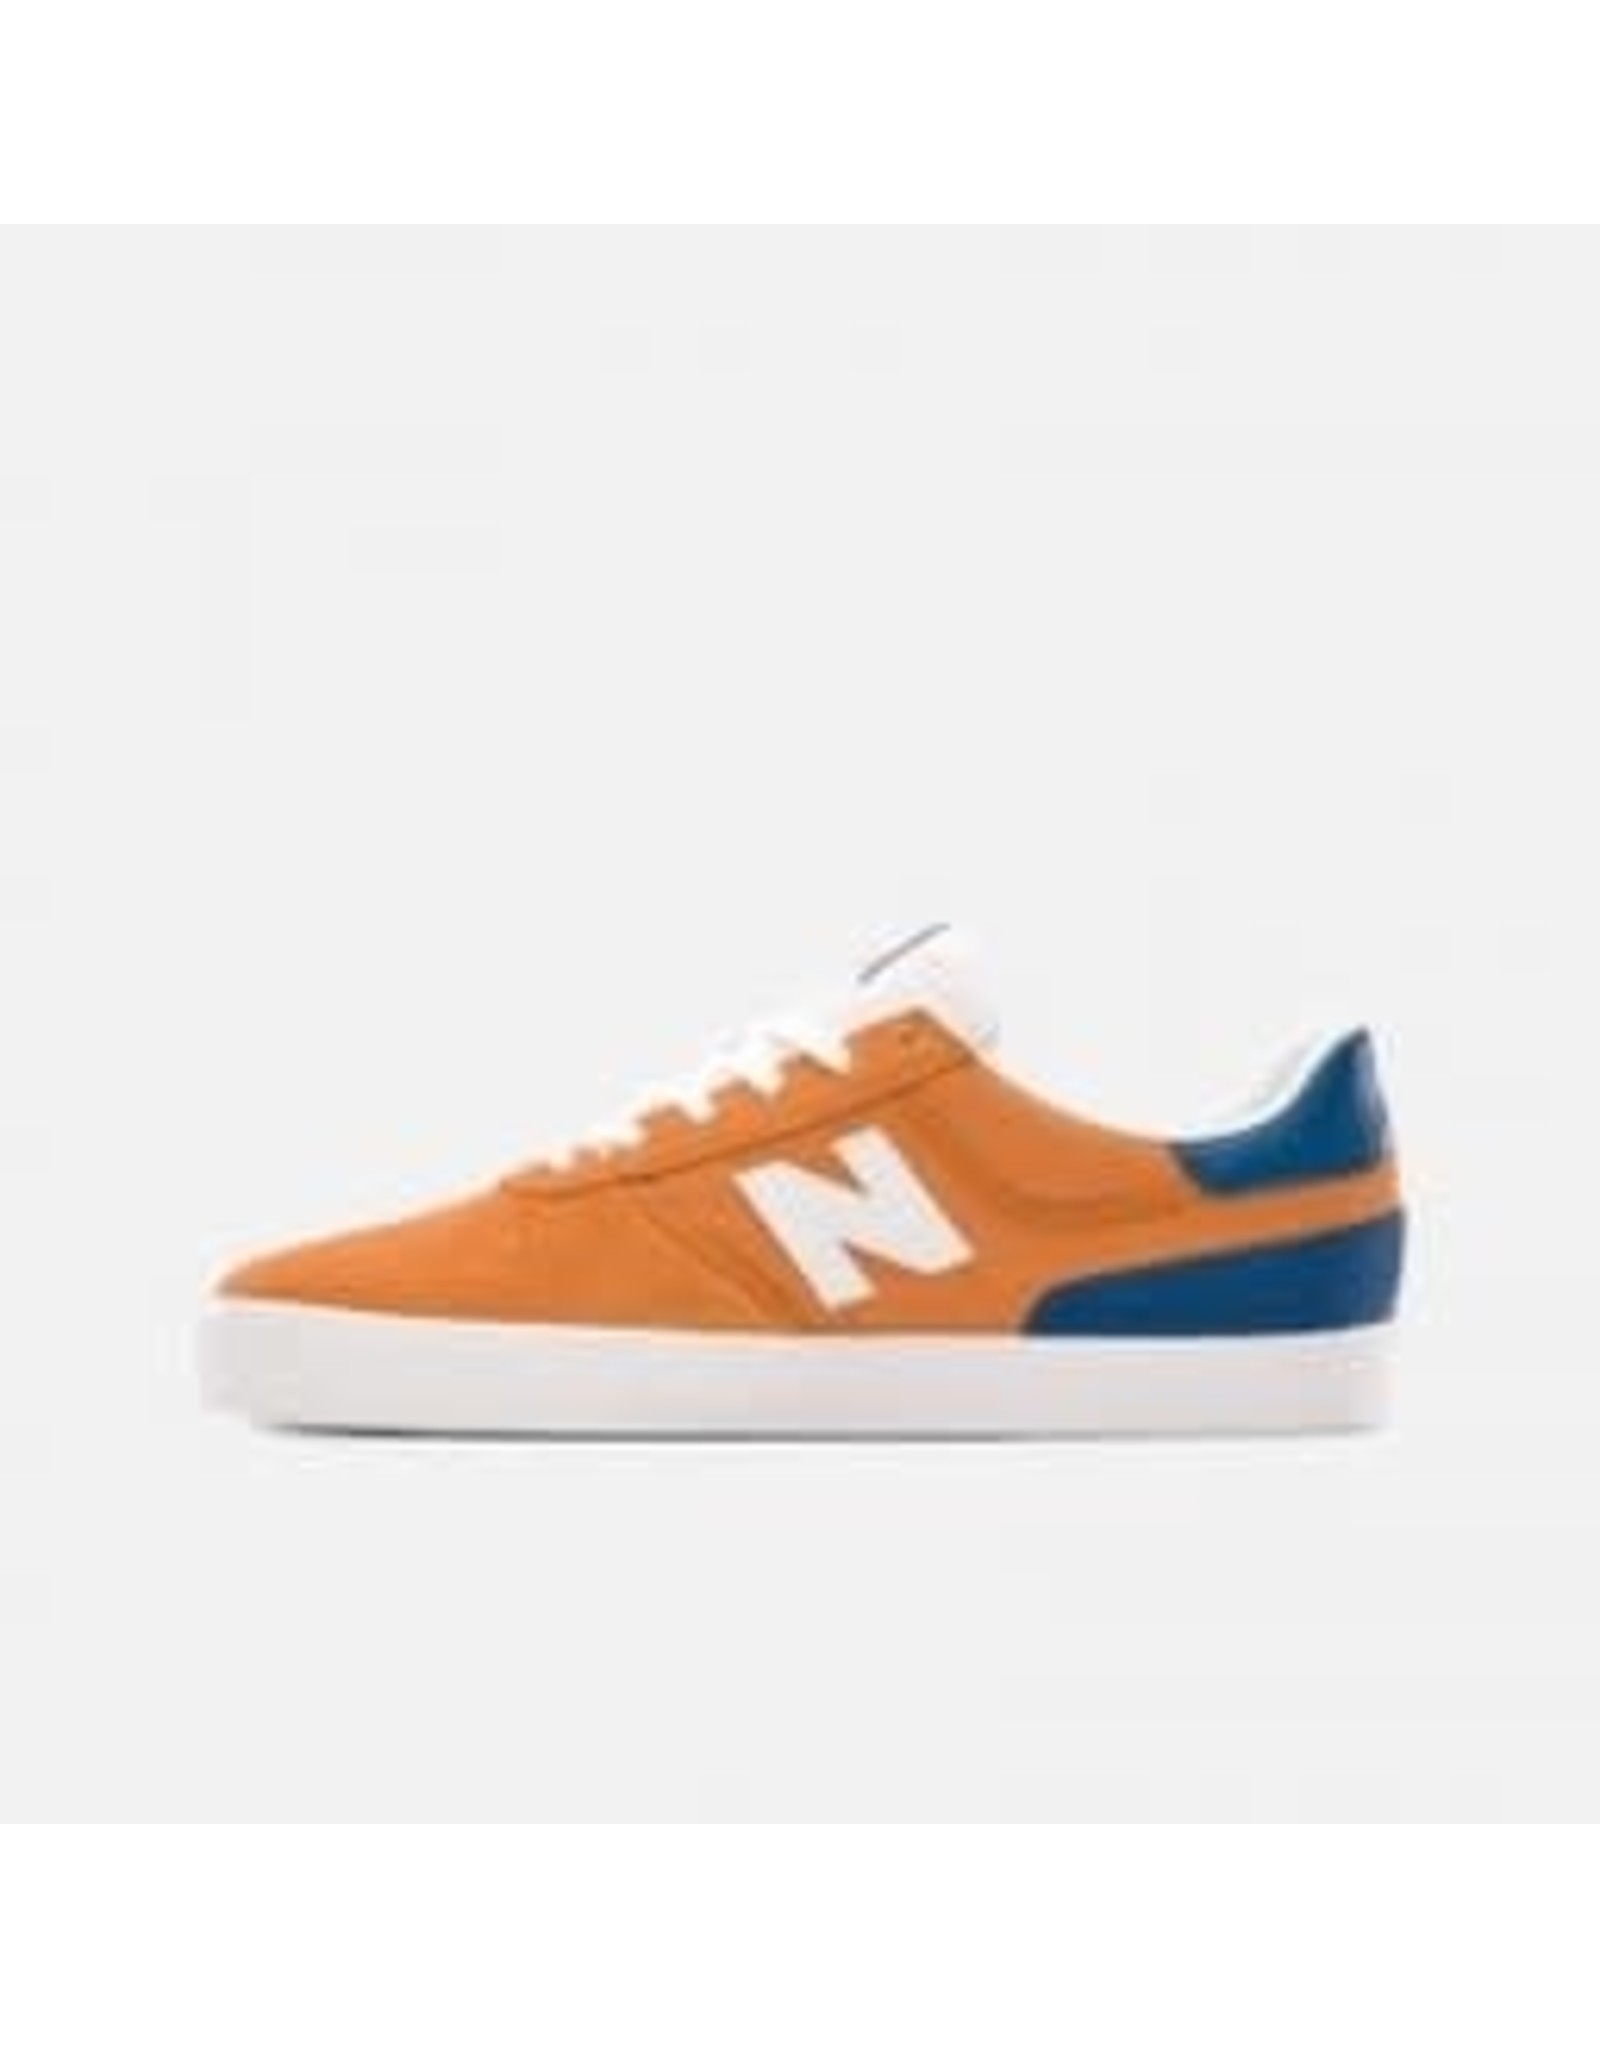 New Balance Numeric Shoes 272